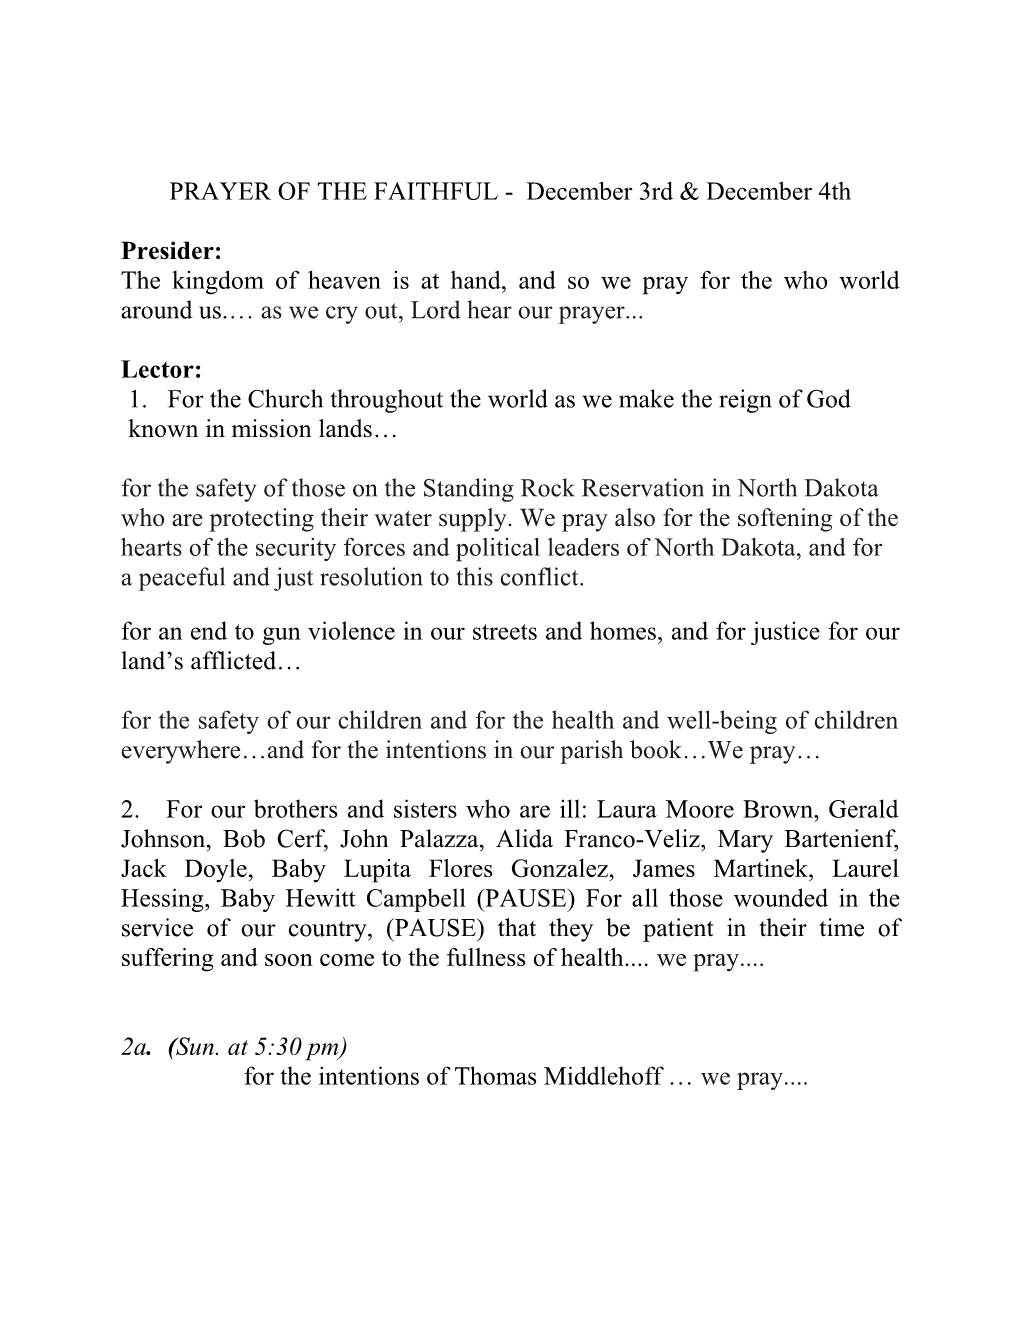 PRAYER of the FAITHFUL - December 3Rd & December 4Th